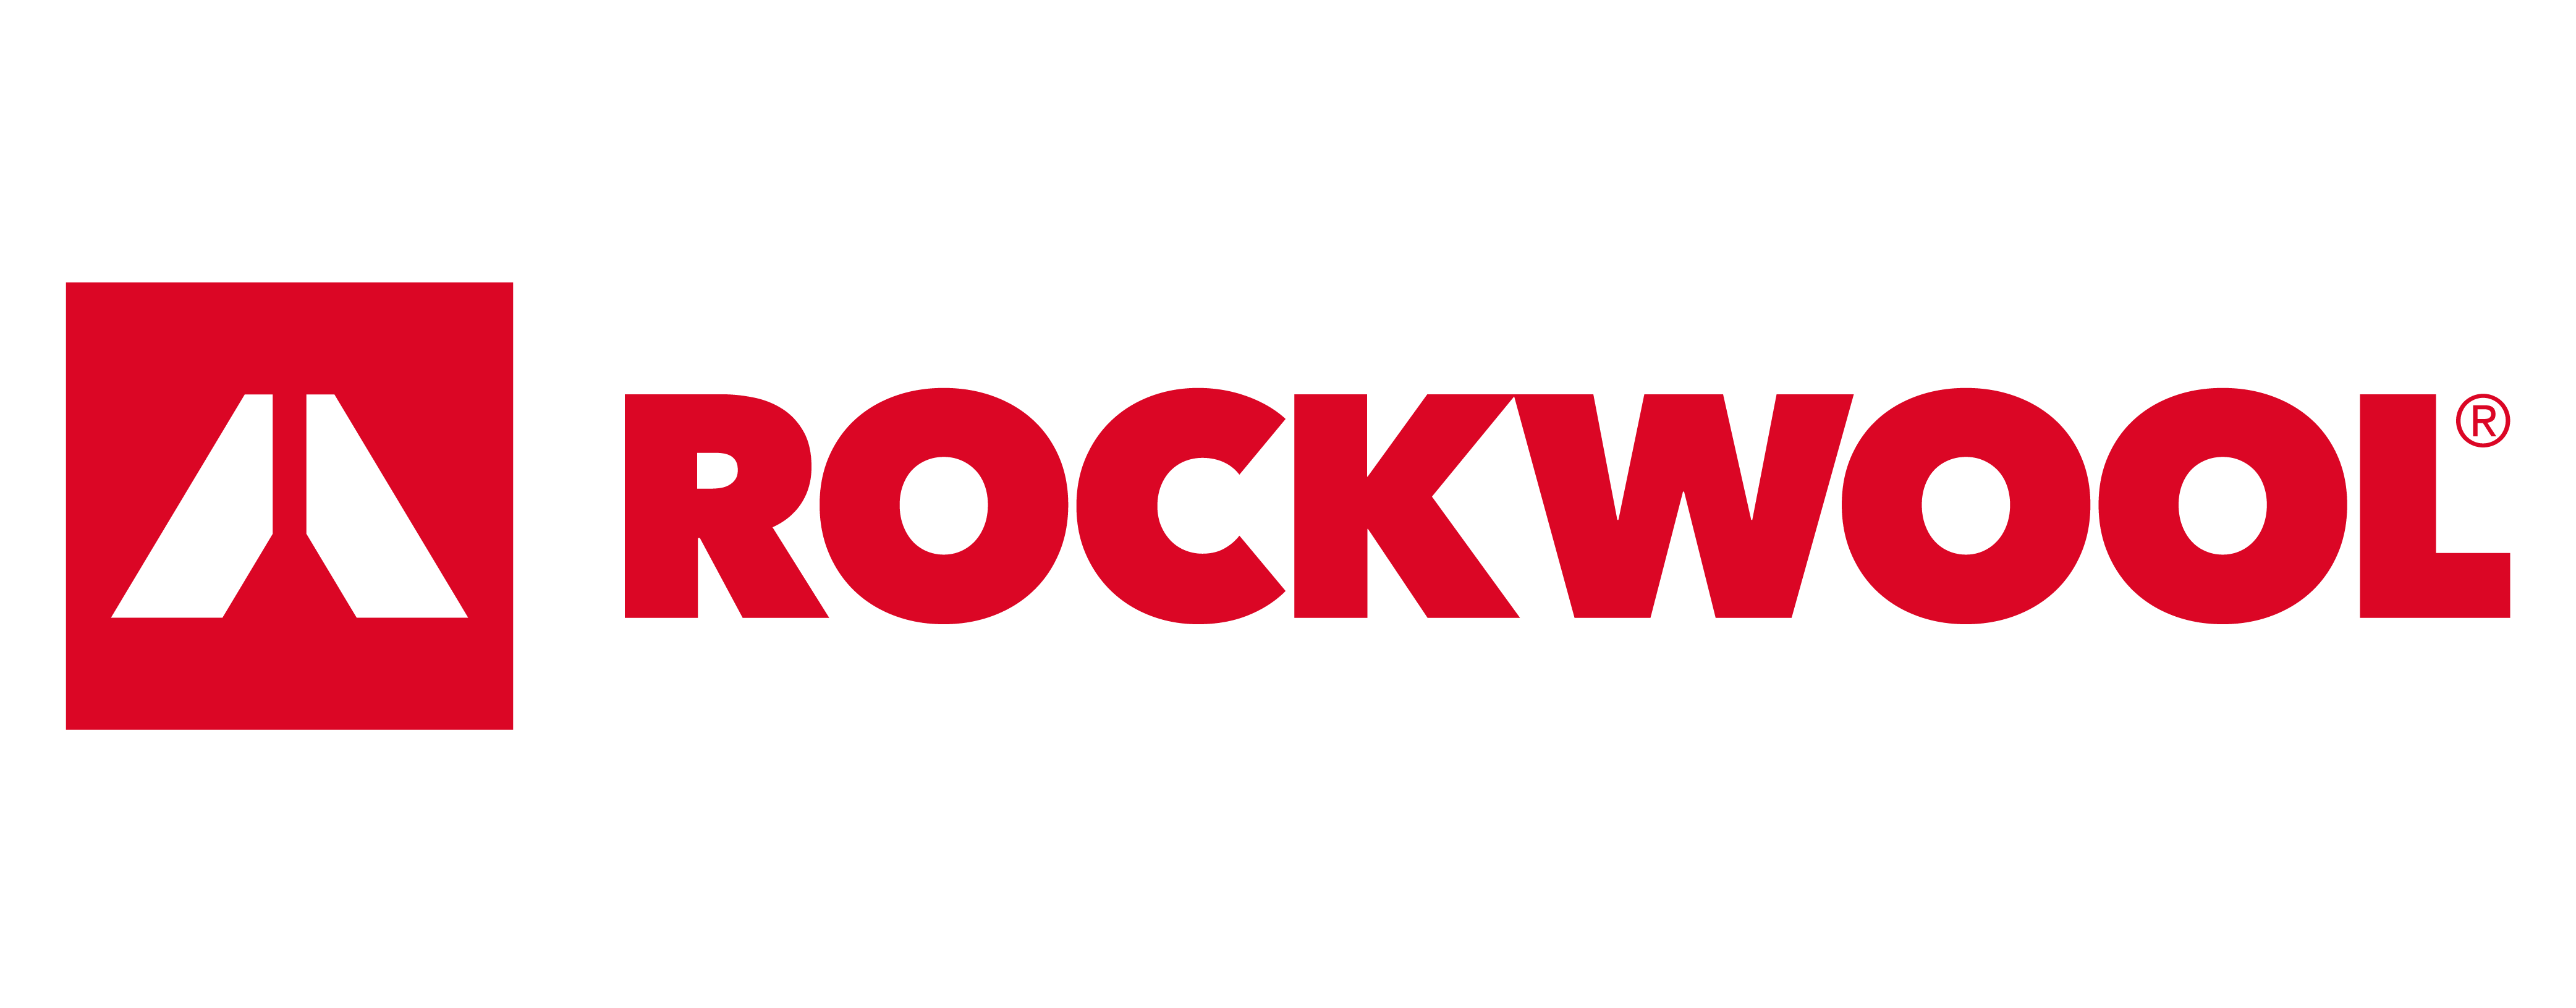 Rockwool la de roca